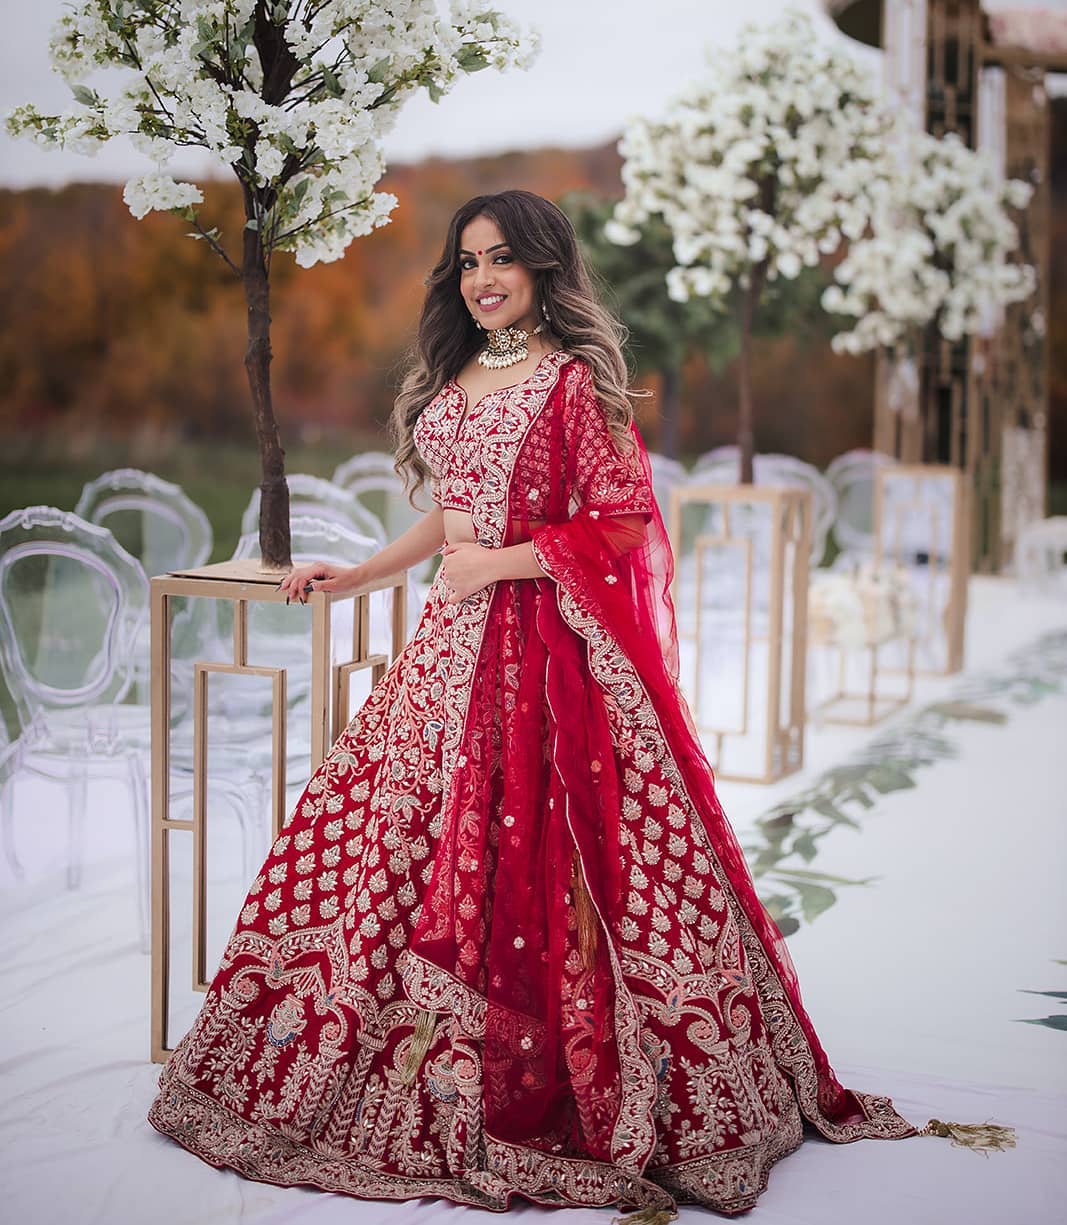 Bridal Lehenga - Asian, Indian and Pakistani Wedding Lengha Outfits